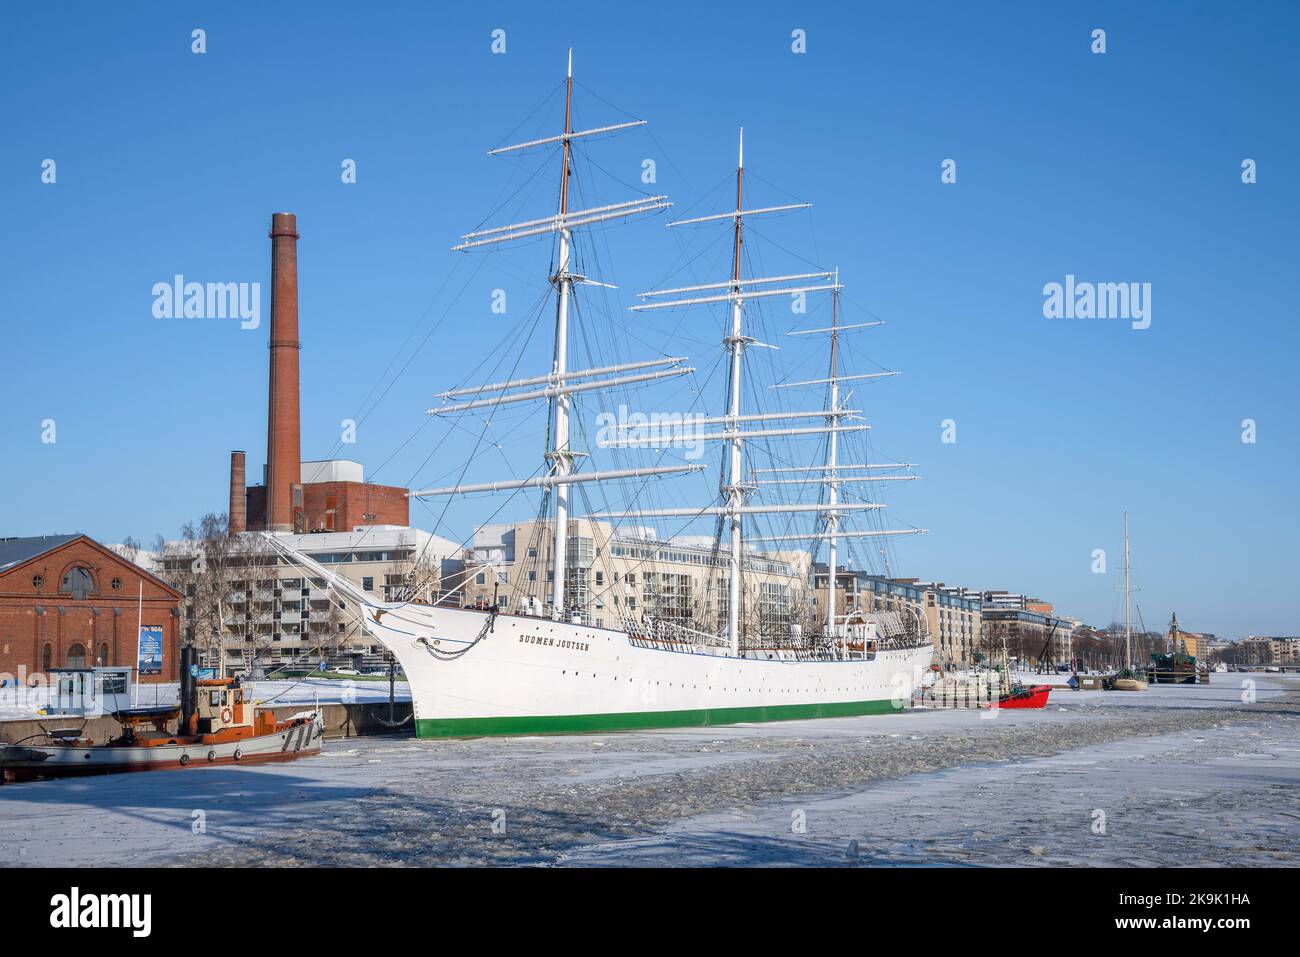 TURKU, FINLAND - FEBRUARY 23, 2018: Vintage sailboat of Suomen Joutsen (Finnish Swan) in cityscape on a sunny February day Stock Photo